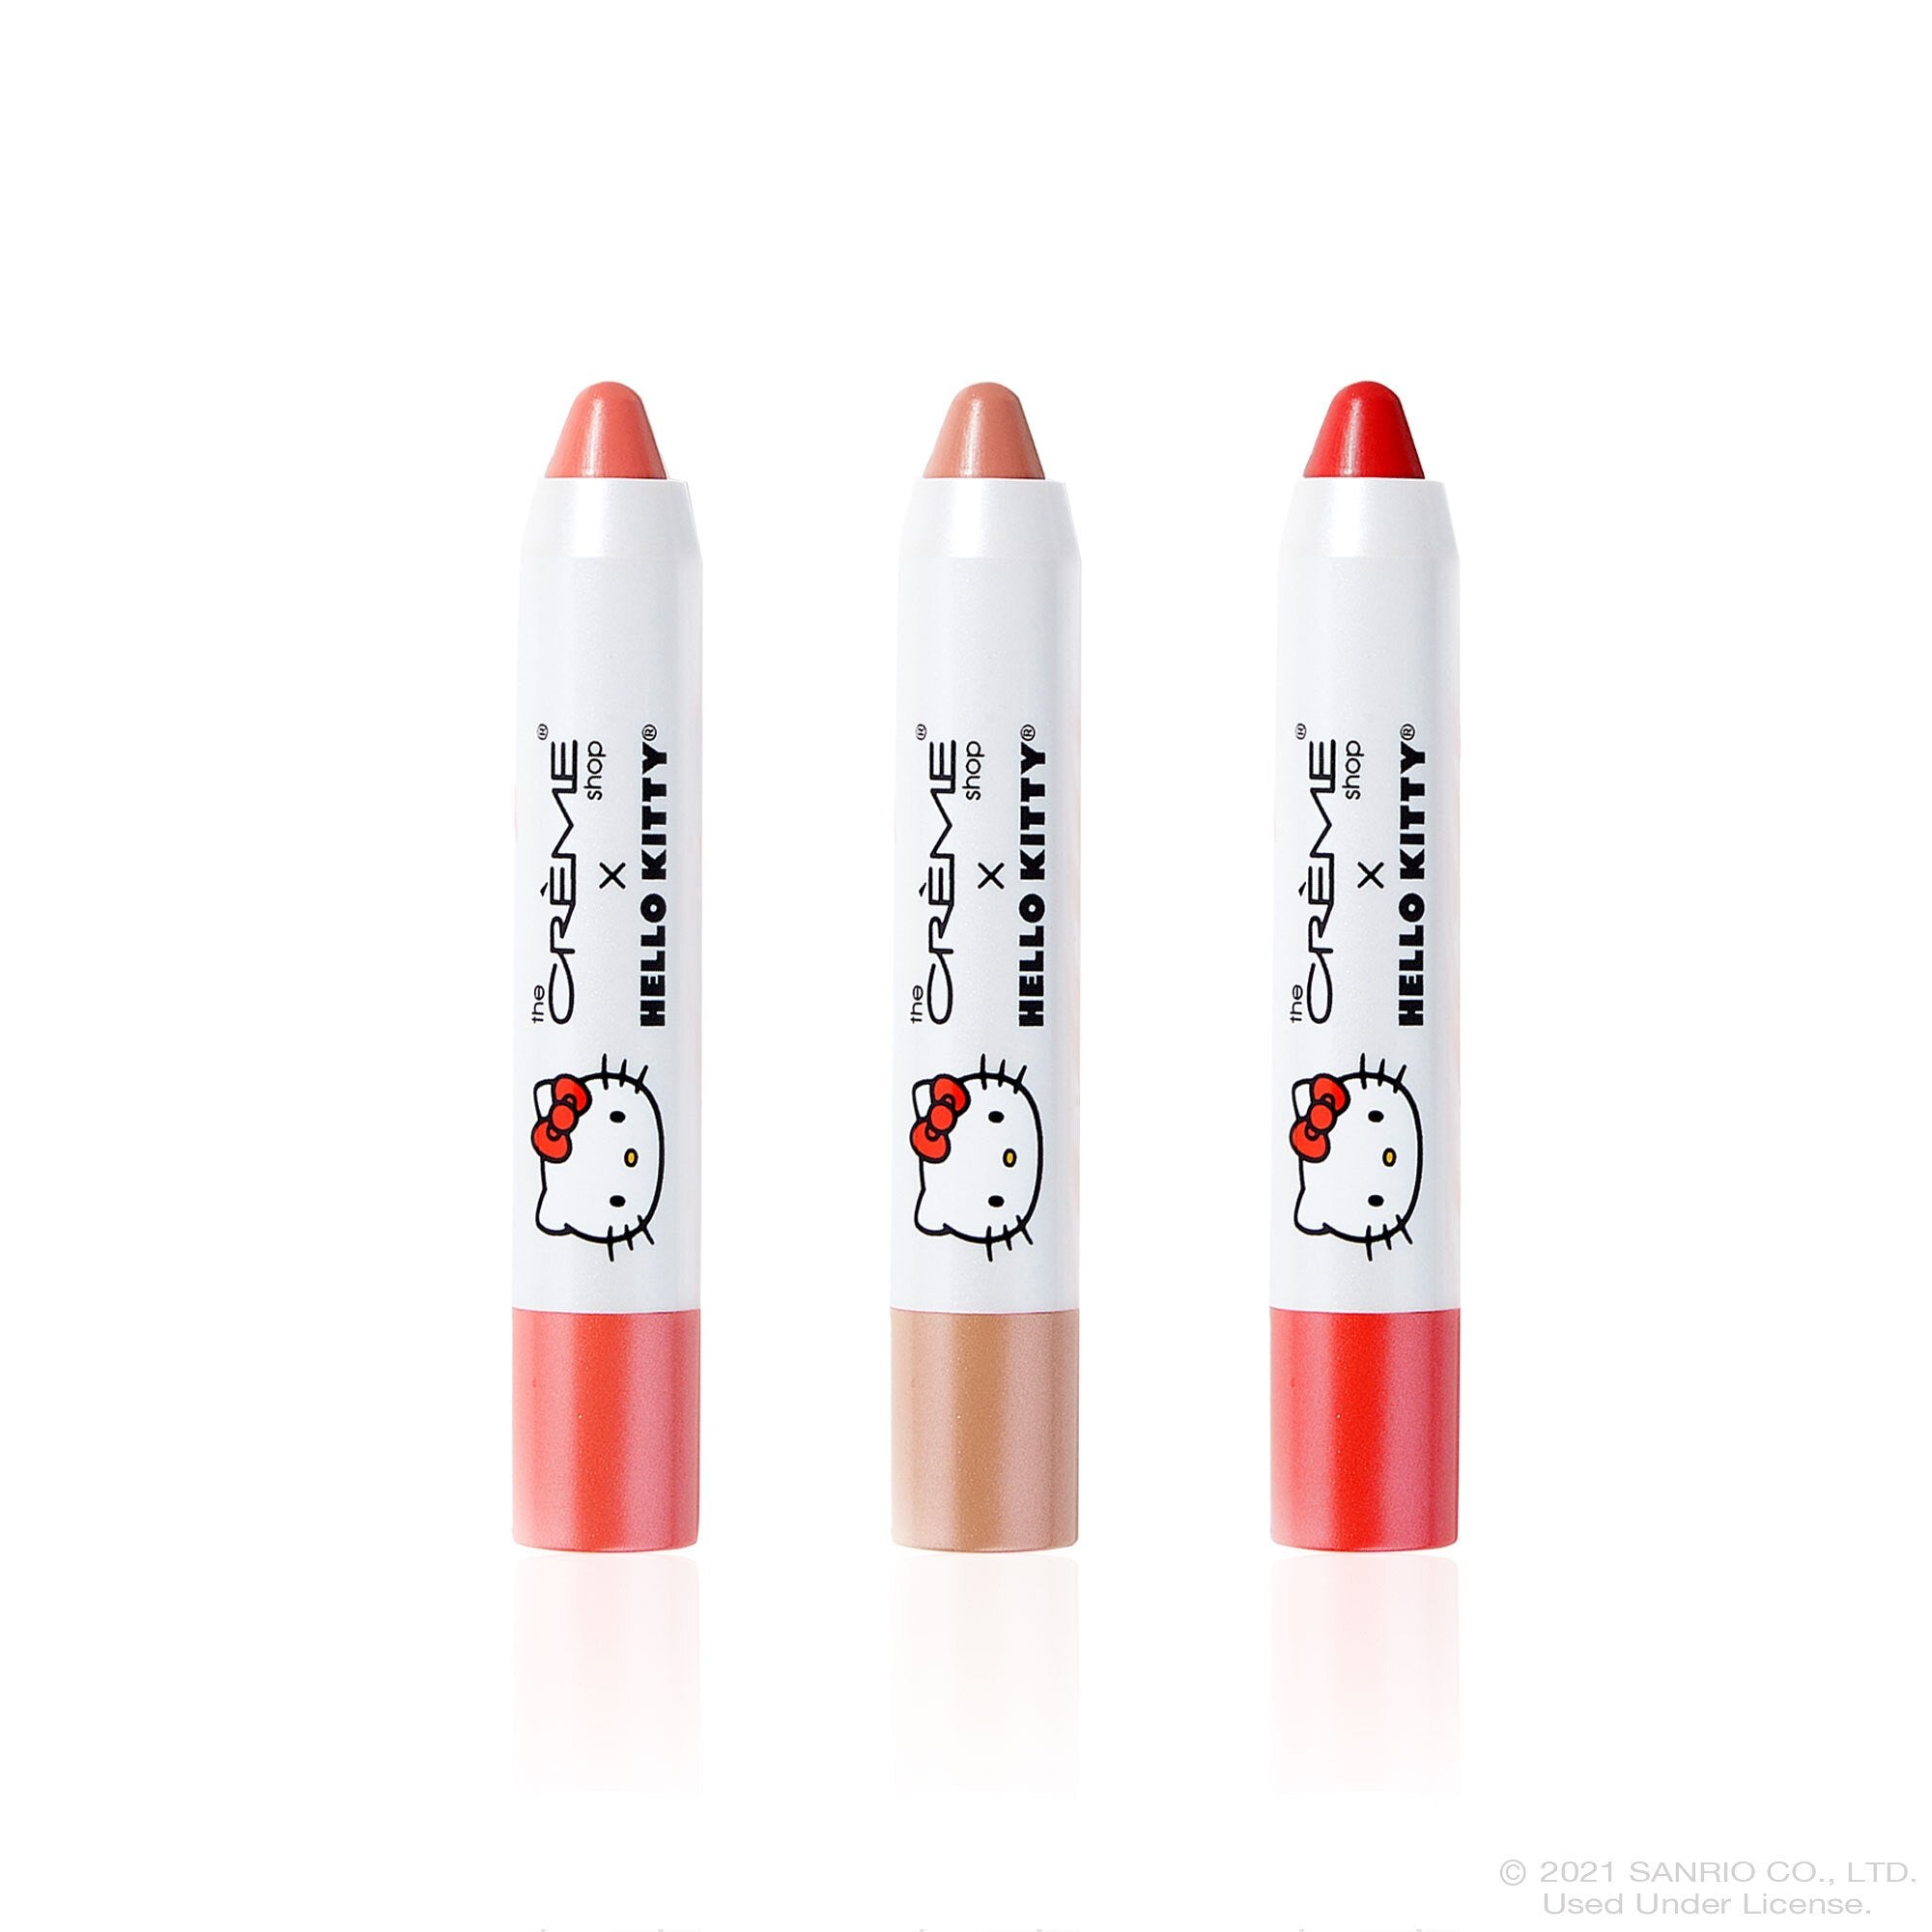 “HELLO LIPPY” Moisturizing Tinted Lip Balm | Strawberry Sweetheart Lip Balms The Crème Shop x Sanrio 